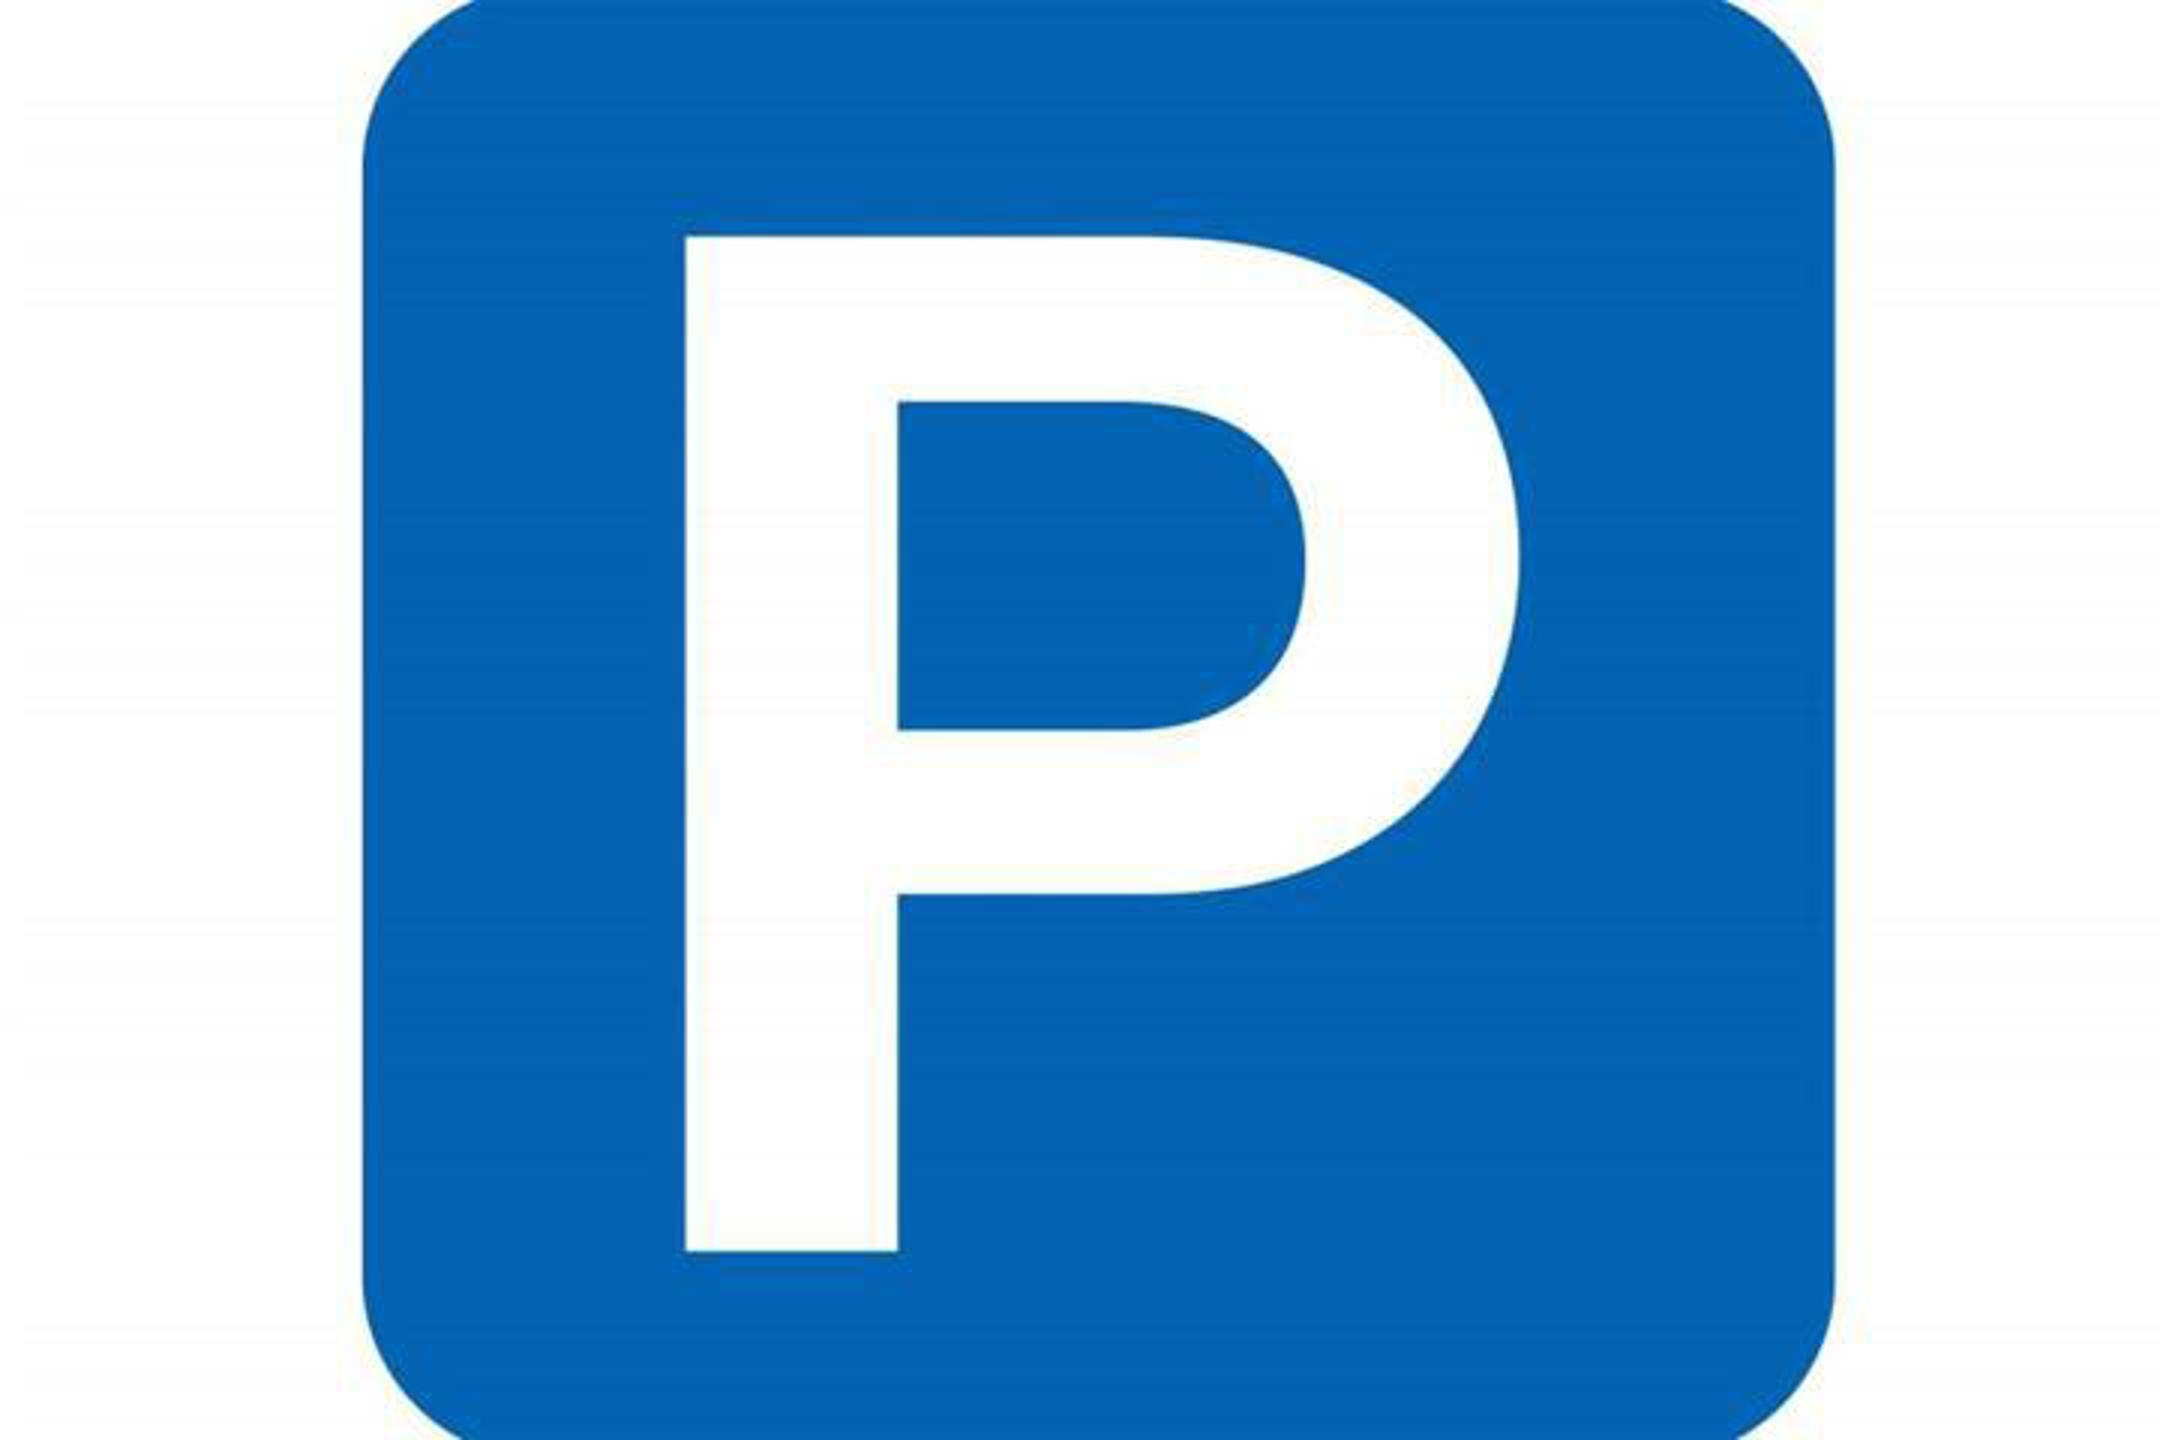 Parking te  huur in Sint-Pieters-Woluwe 1150 110.00€  slaapkamers 12.25m² - Zoekertje 52655